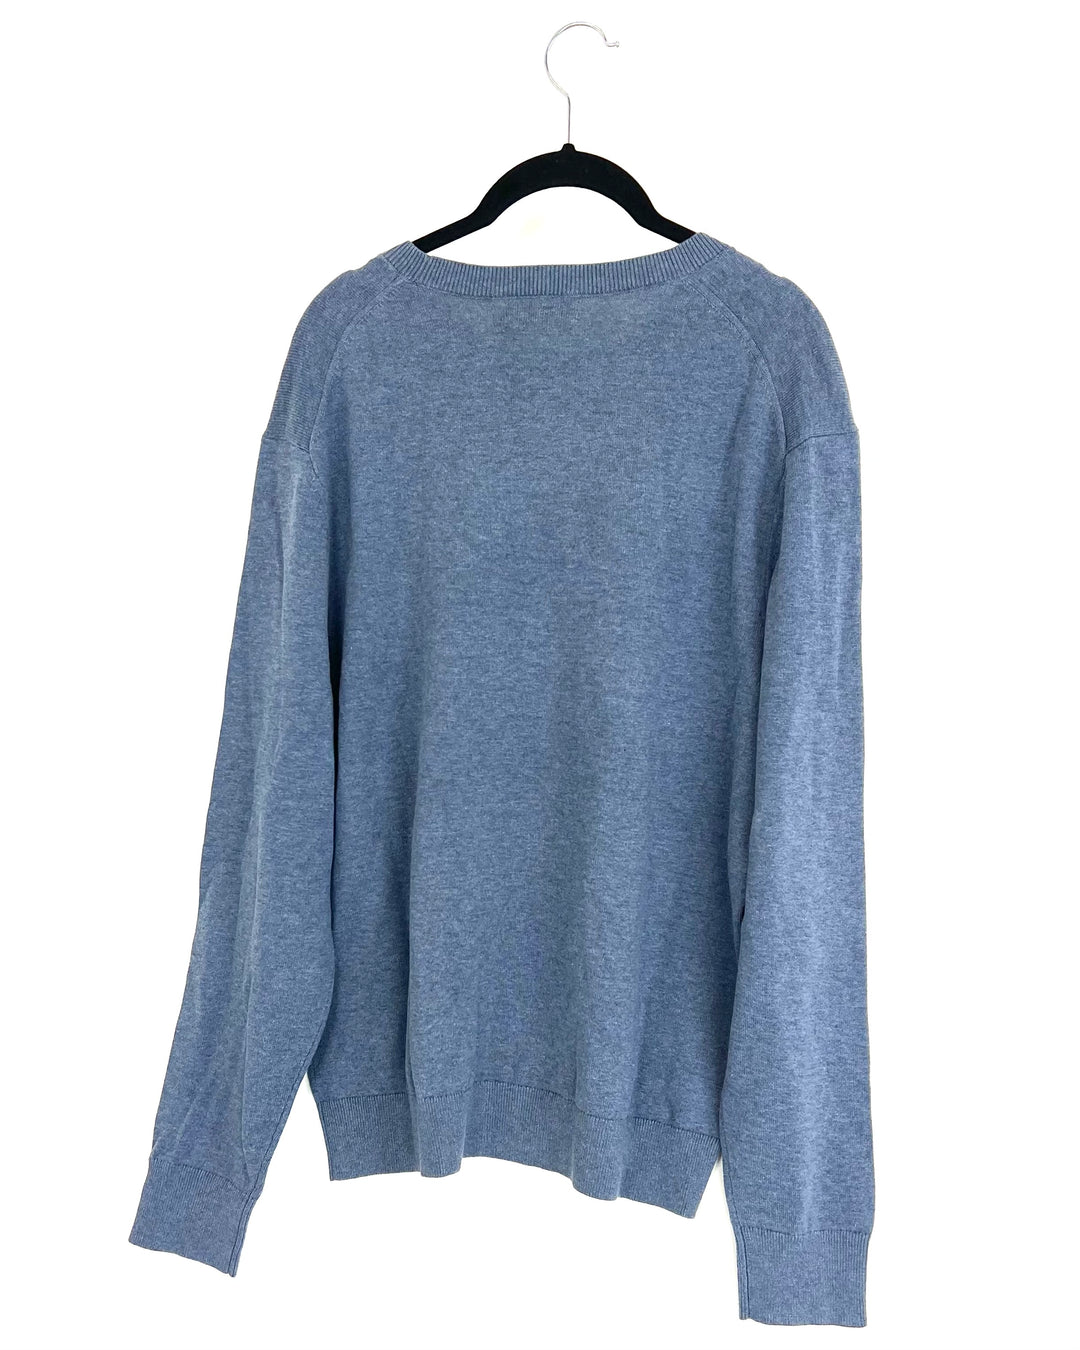 MENS Muted Blue Sweater - Medium